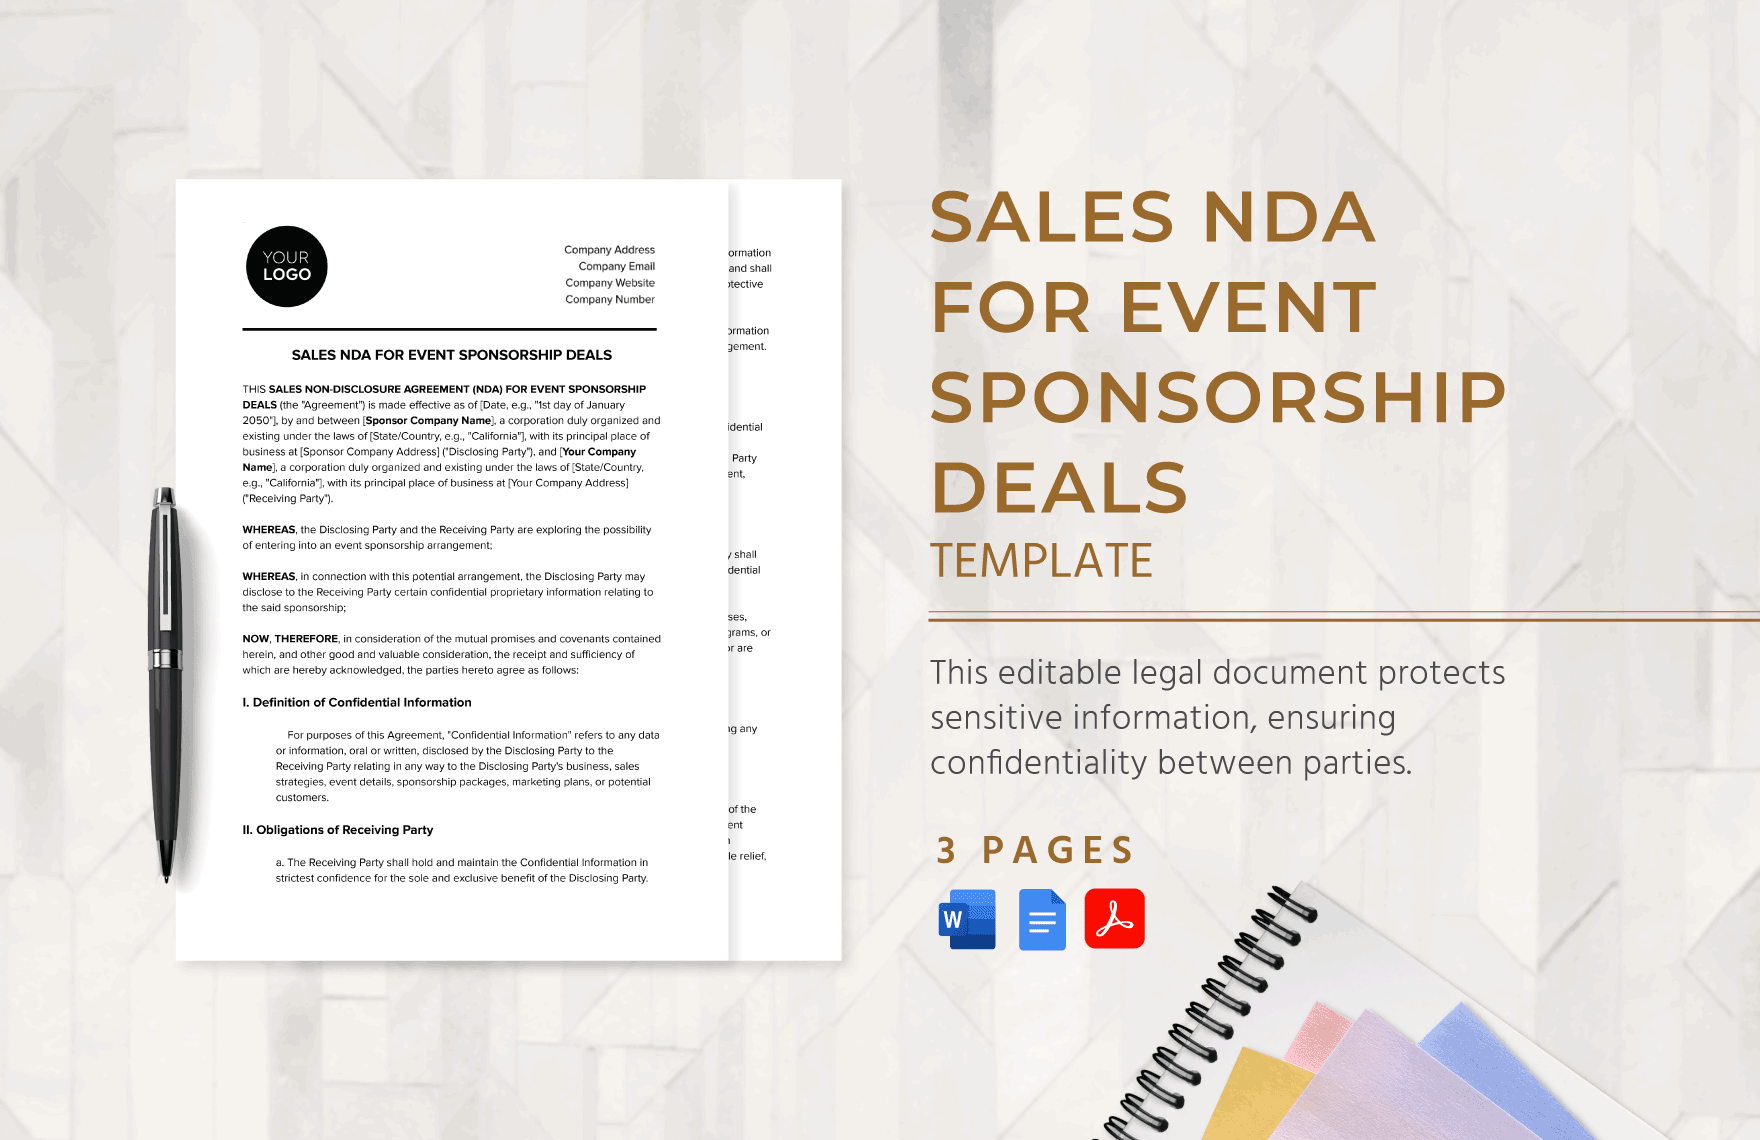 Sales NDA for Event Sponsorship Deals Template